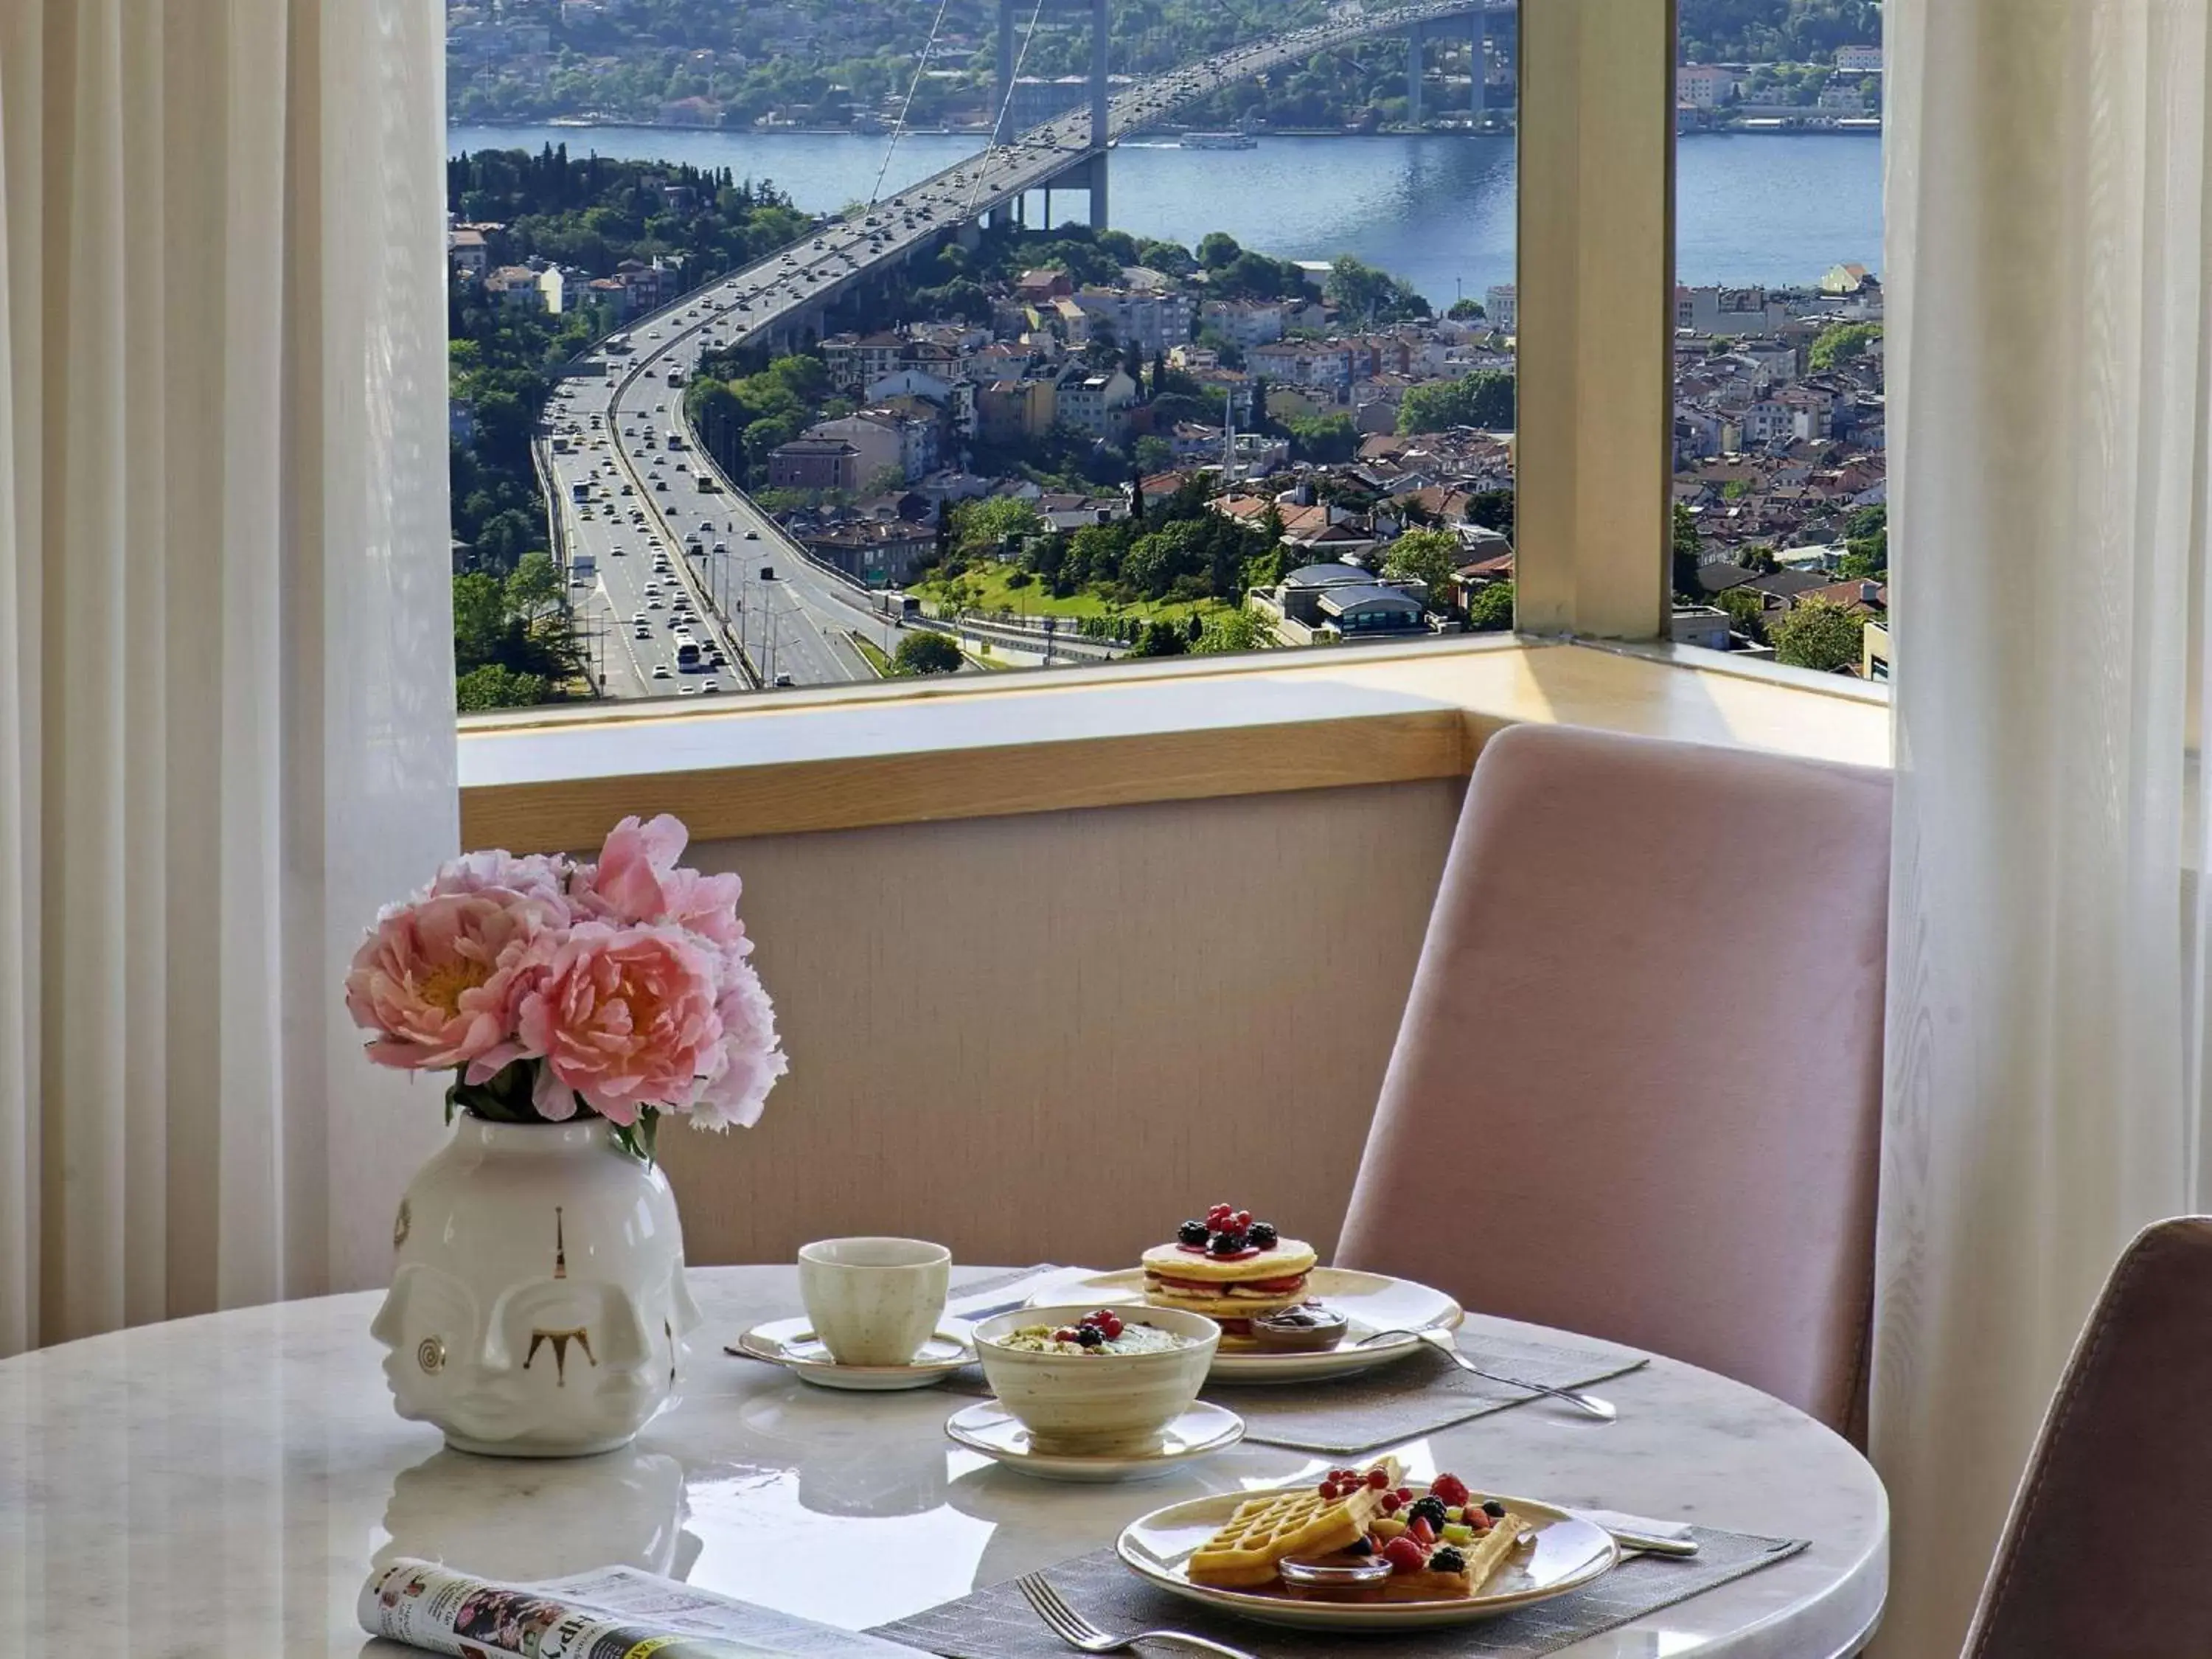 Bedroom in Mövenpick Hotel Istanbul Bosphorus